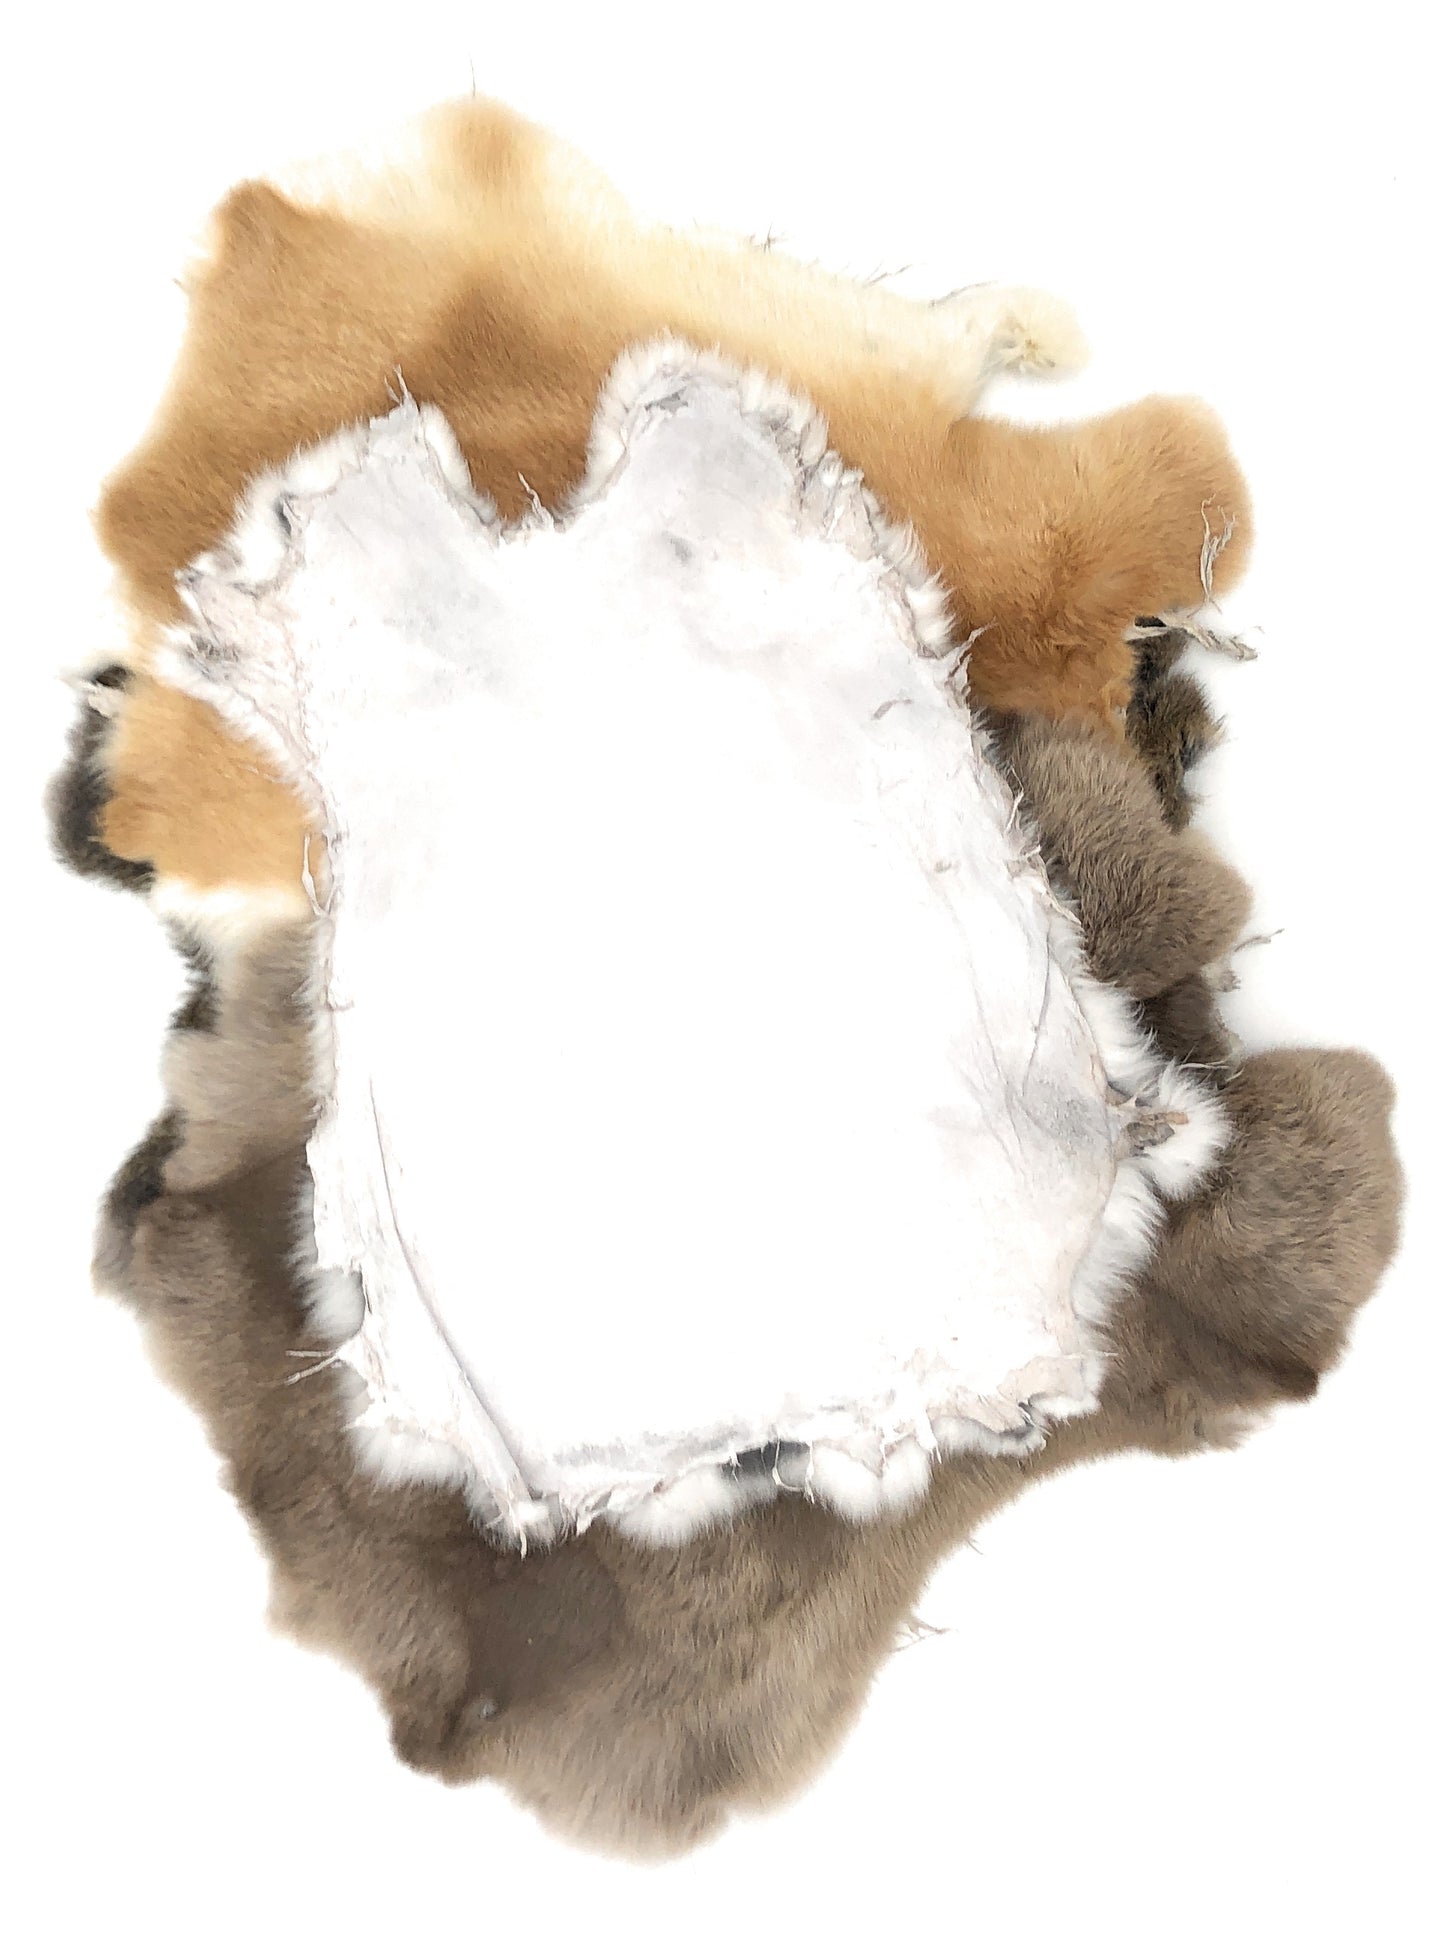 Tanned Rabbit Fur Skin Pelts – Sanctuary Traders